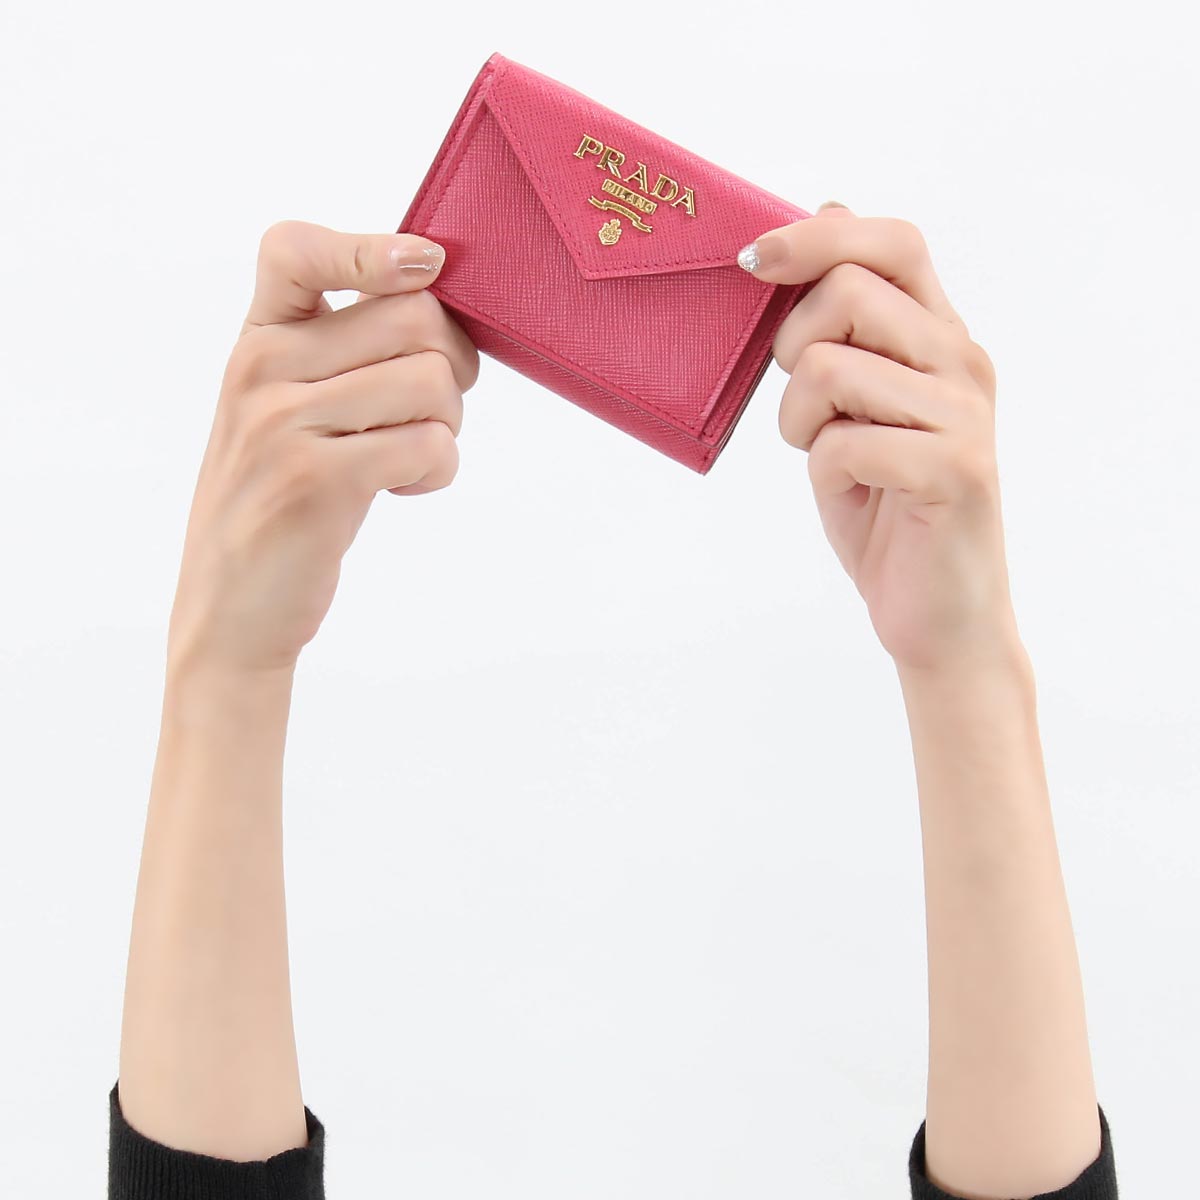 PRADA　プラダ　サフィアーノ　三つ折り財布　コンパクトウォレット　ピンクファッション小物